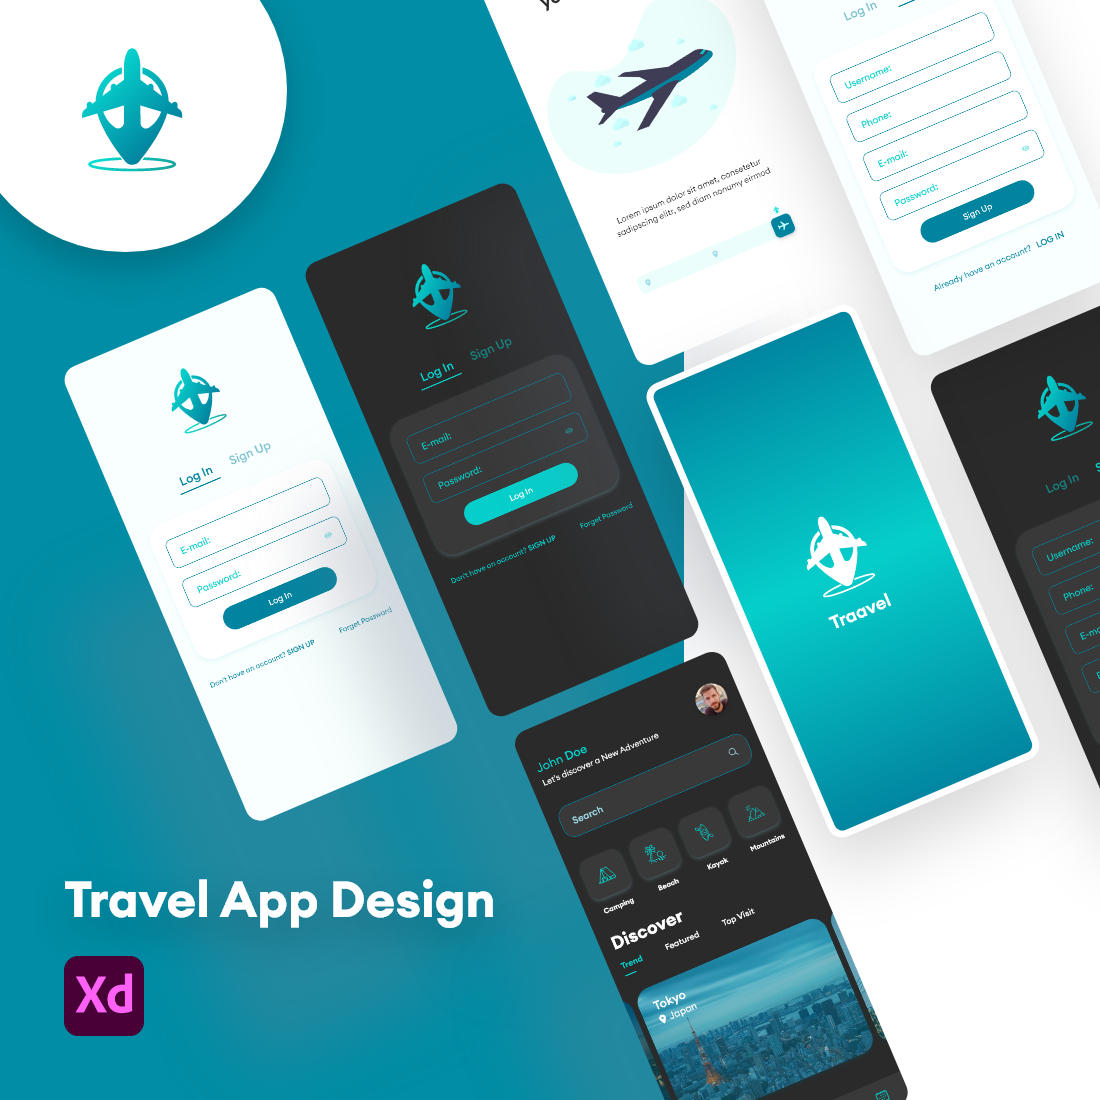 Travel Mobile App Design Cover Image.